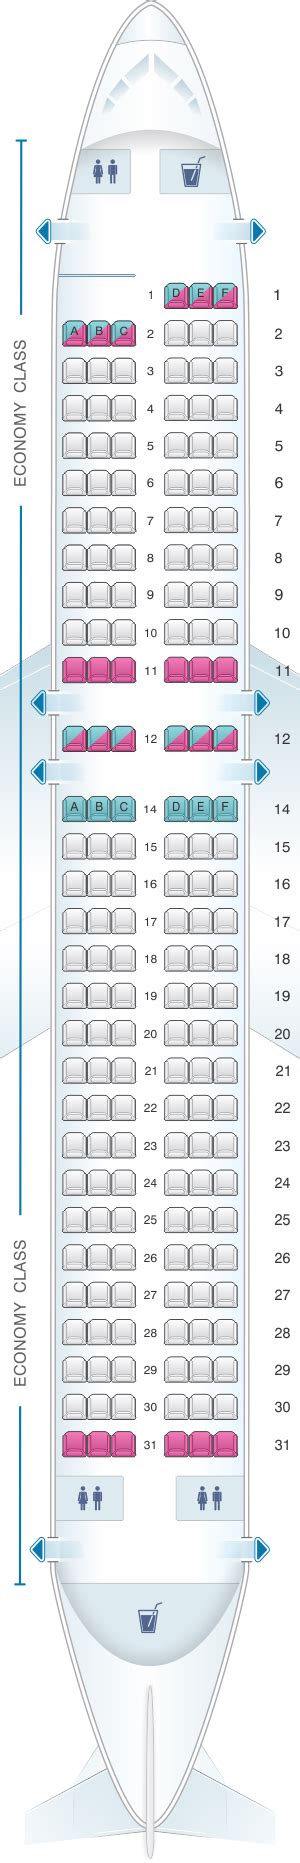 Check Details Seatguru seat map allegiant. Boeing 757-200 del